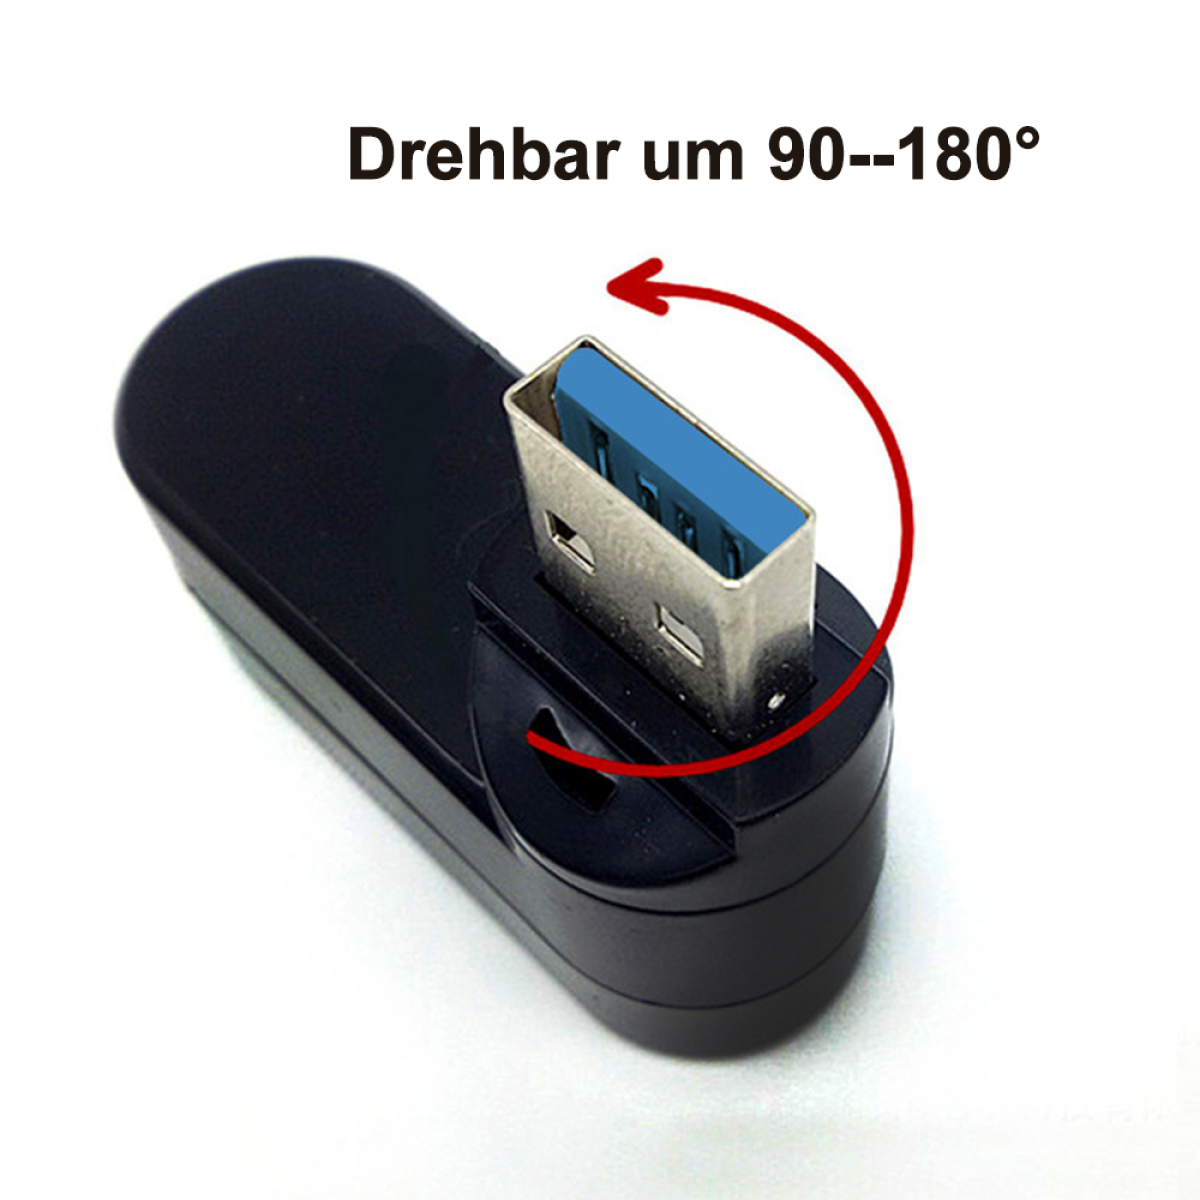 ELKUAIE 3-Port-Multifunktion, USB Hub, Schwarz